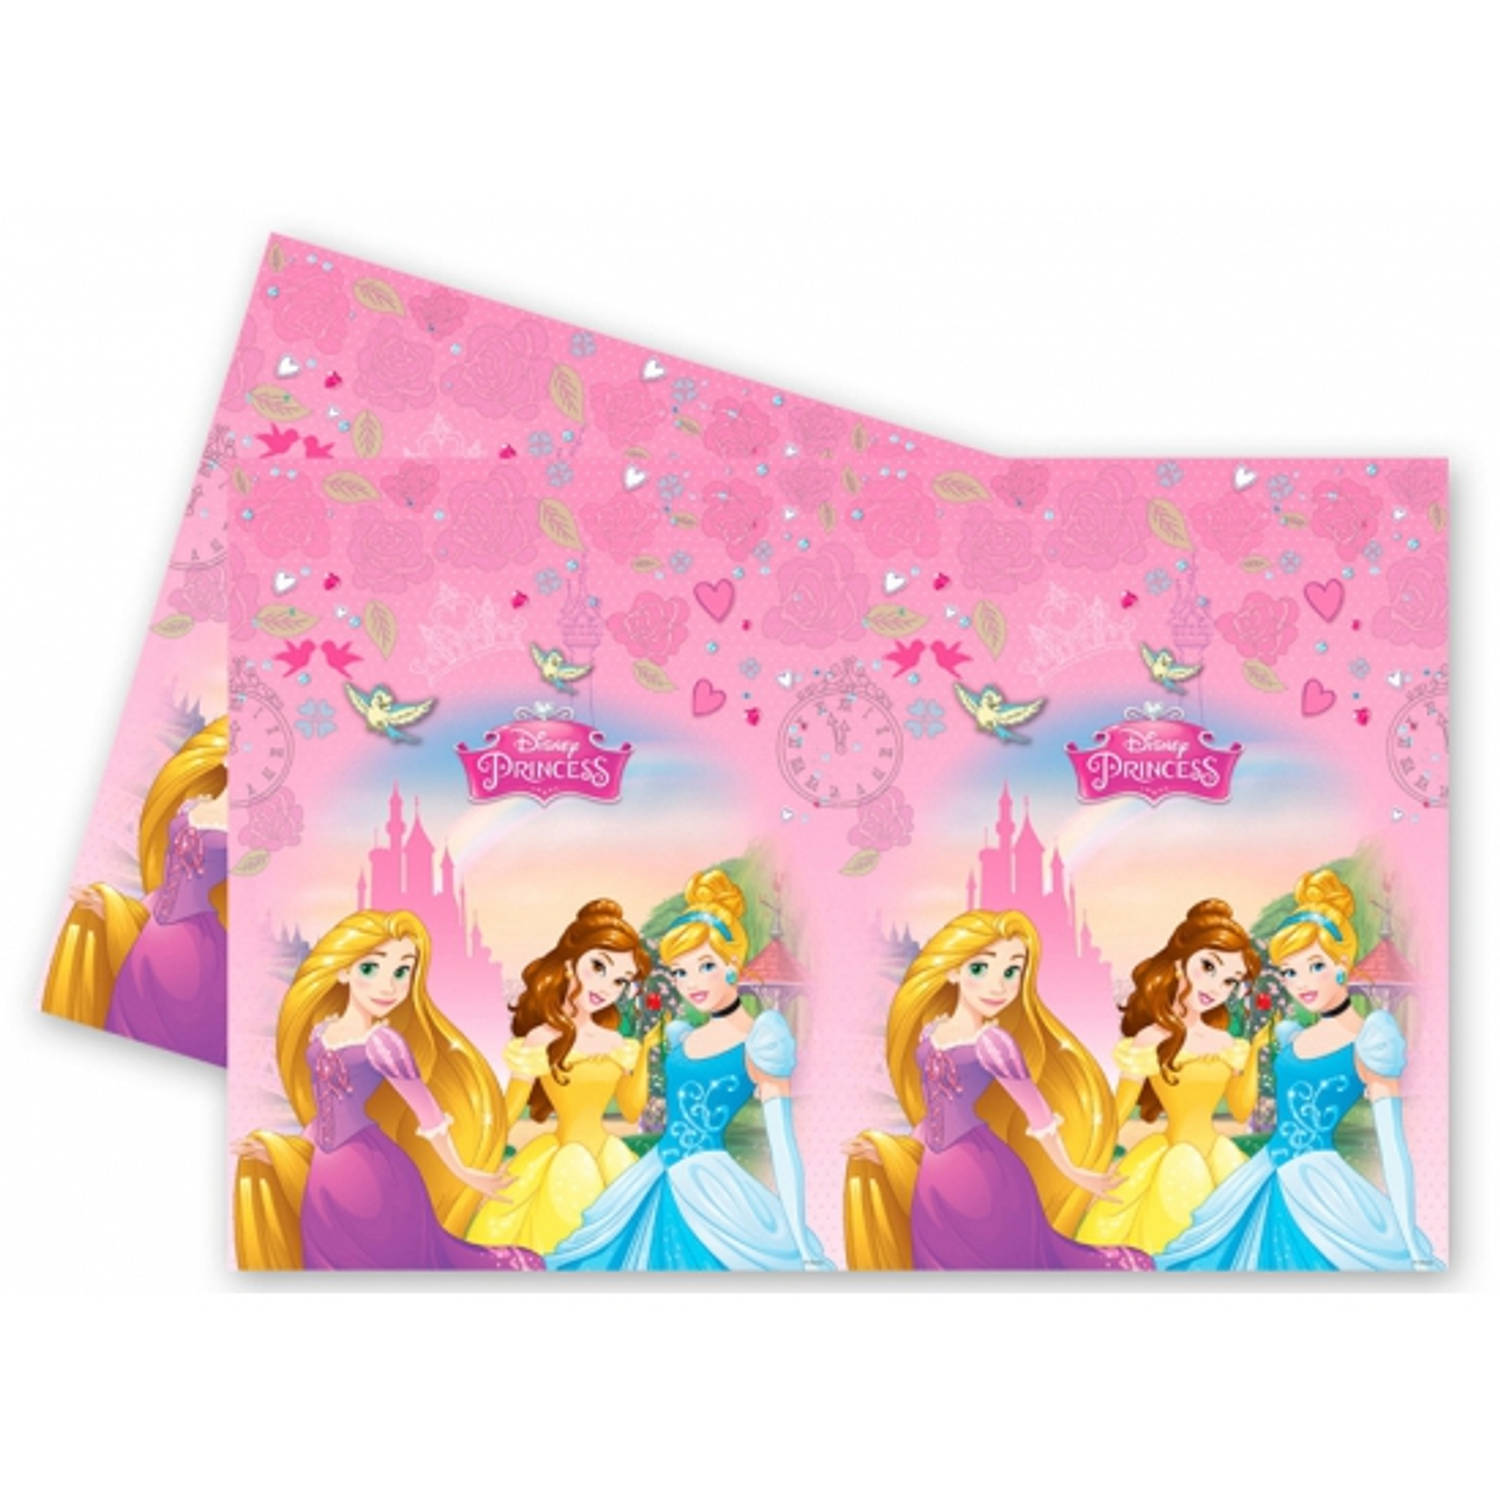 Disney prinsessen tafelkleed - Feesttafelkleden